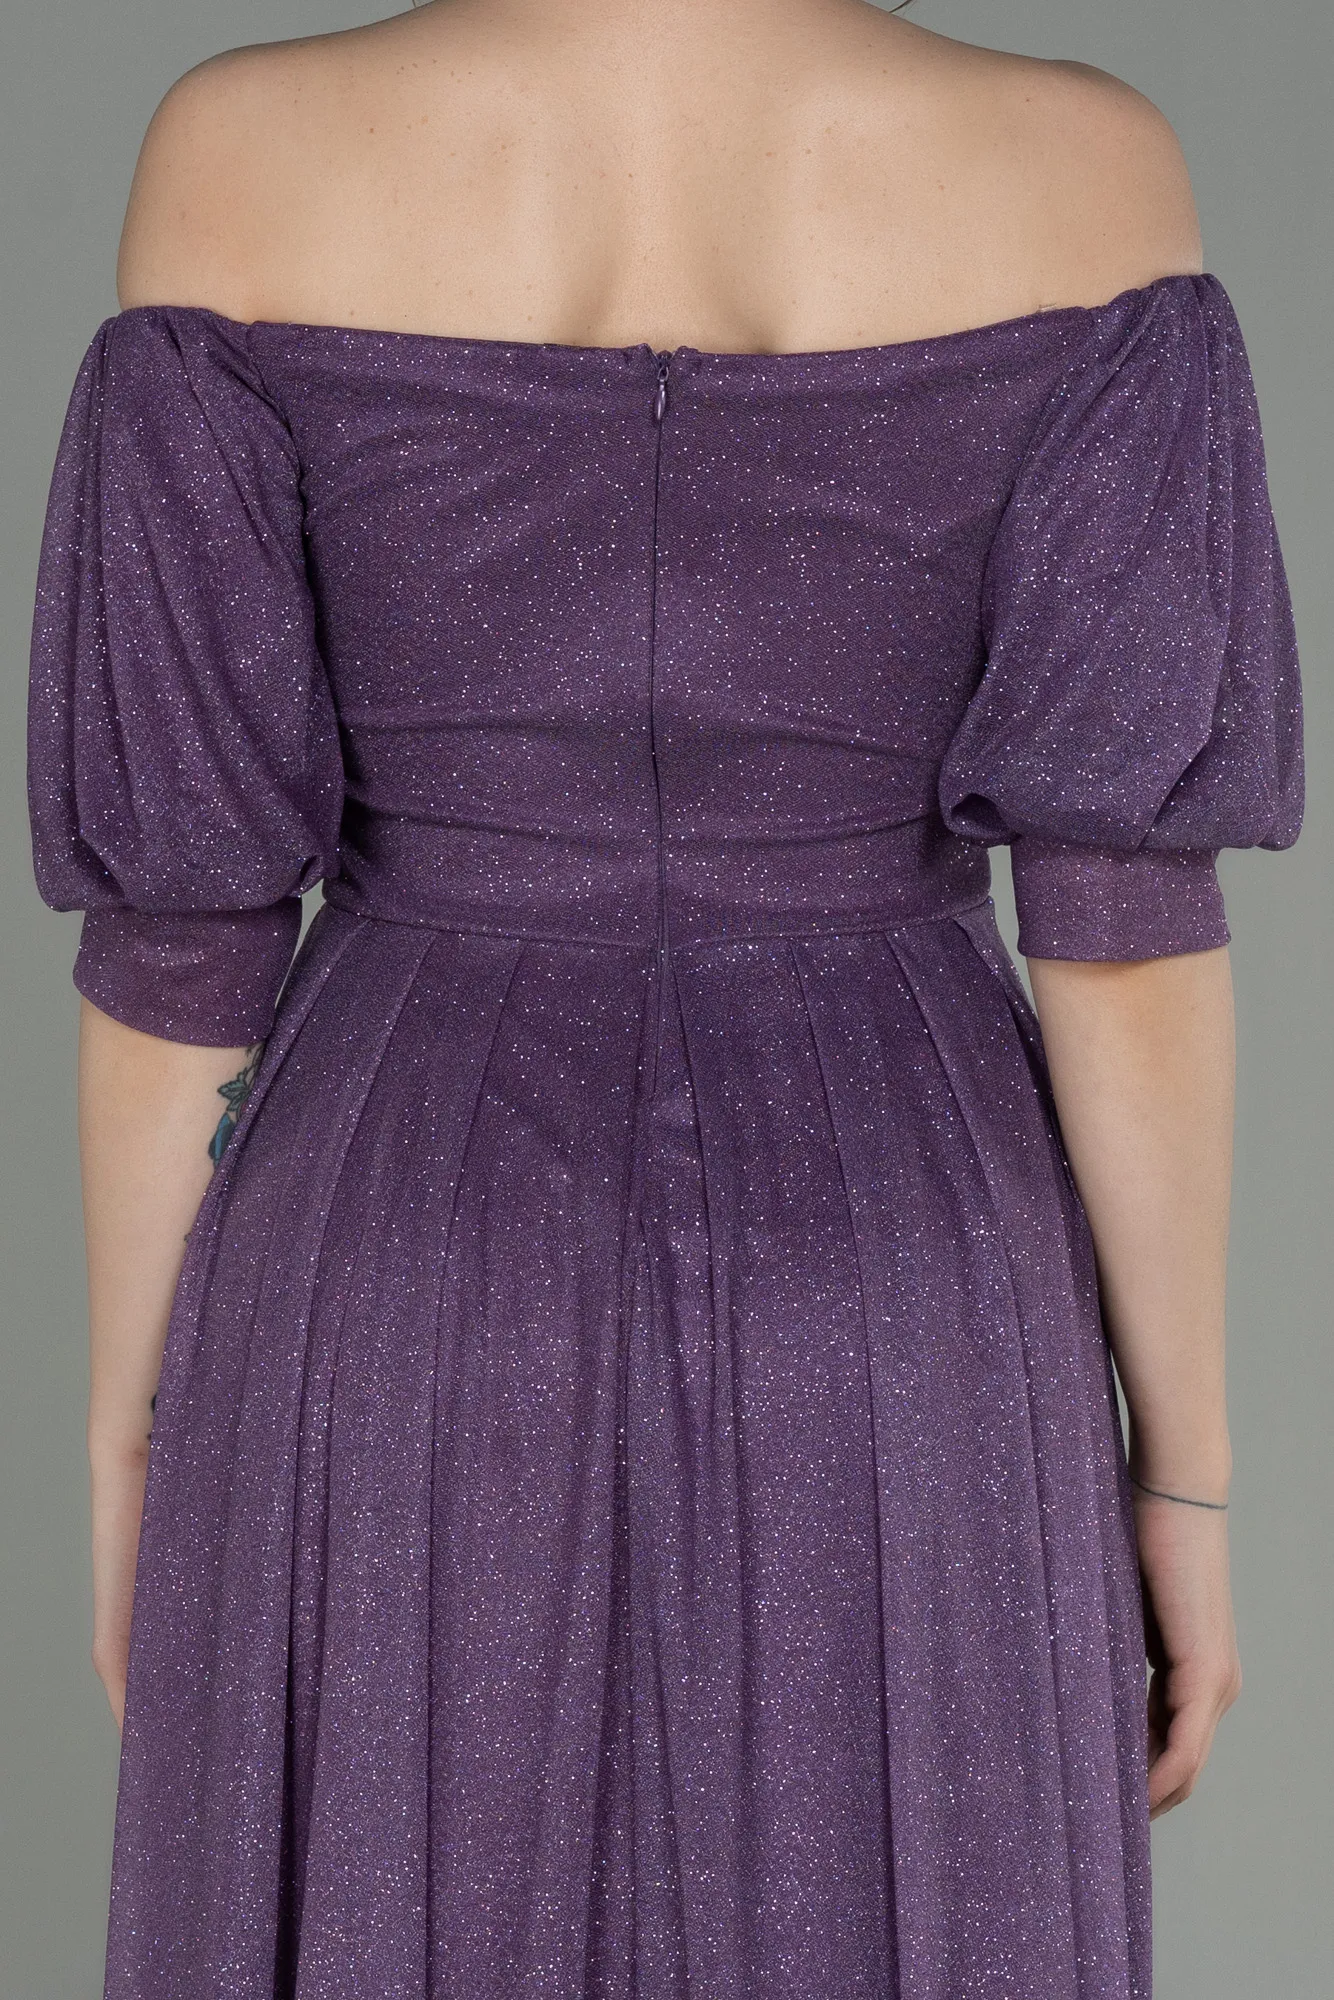 Lavender-Long Evening Dress ABU2983